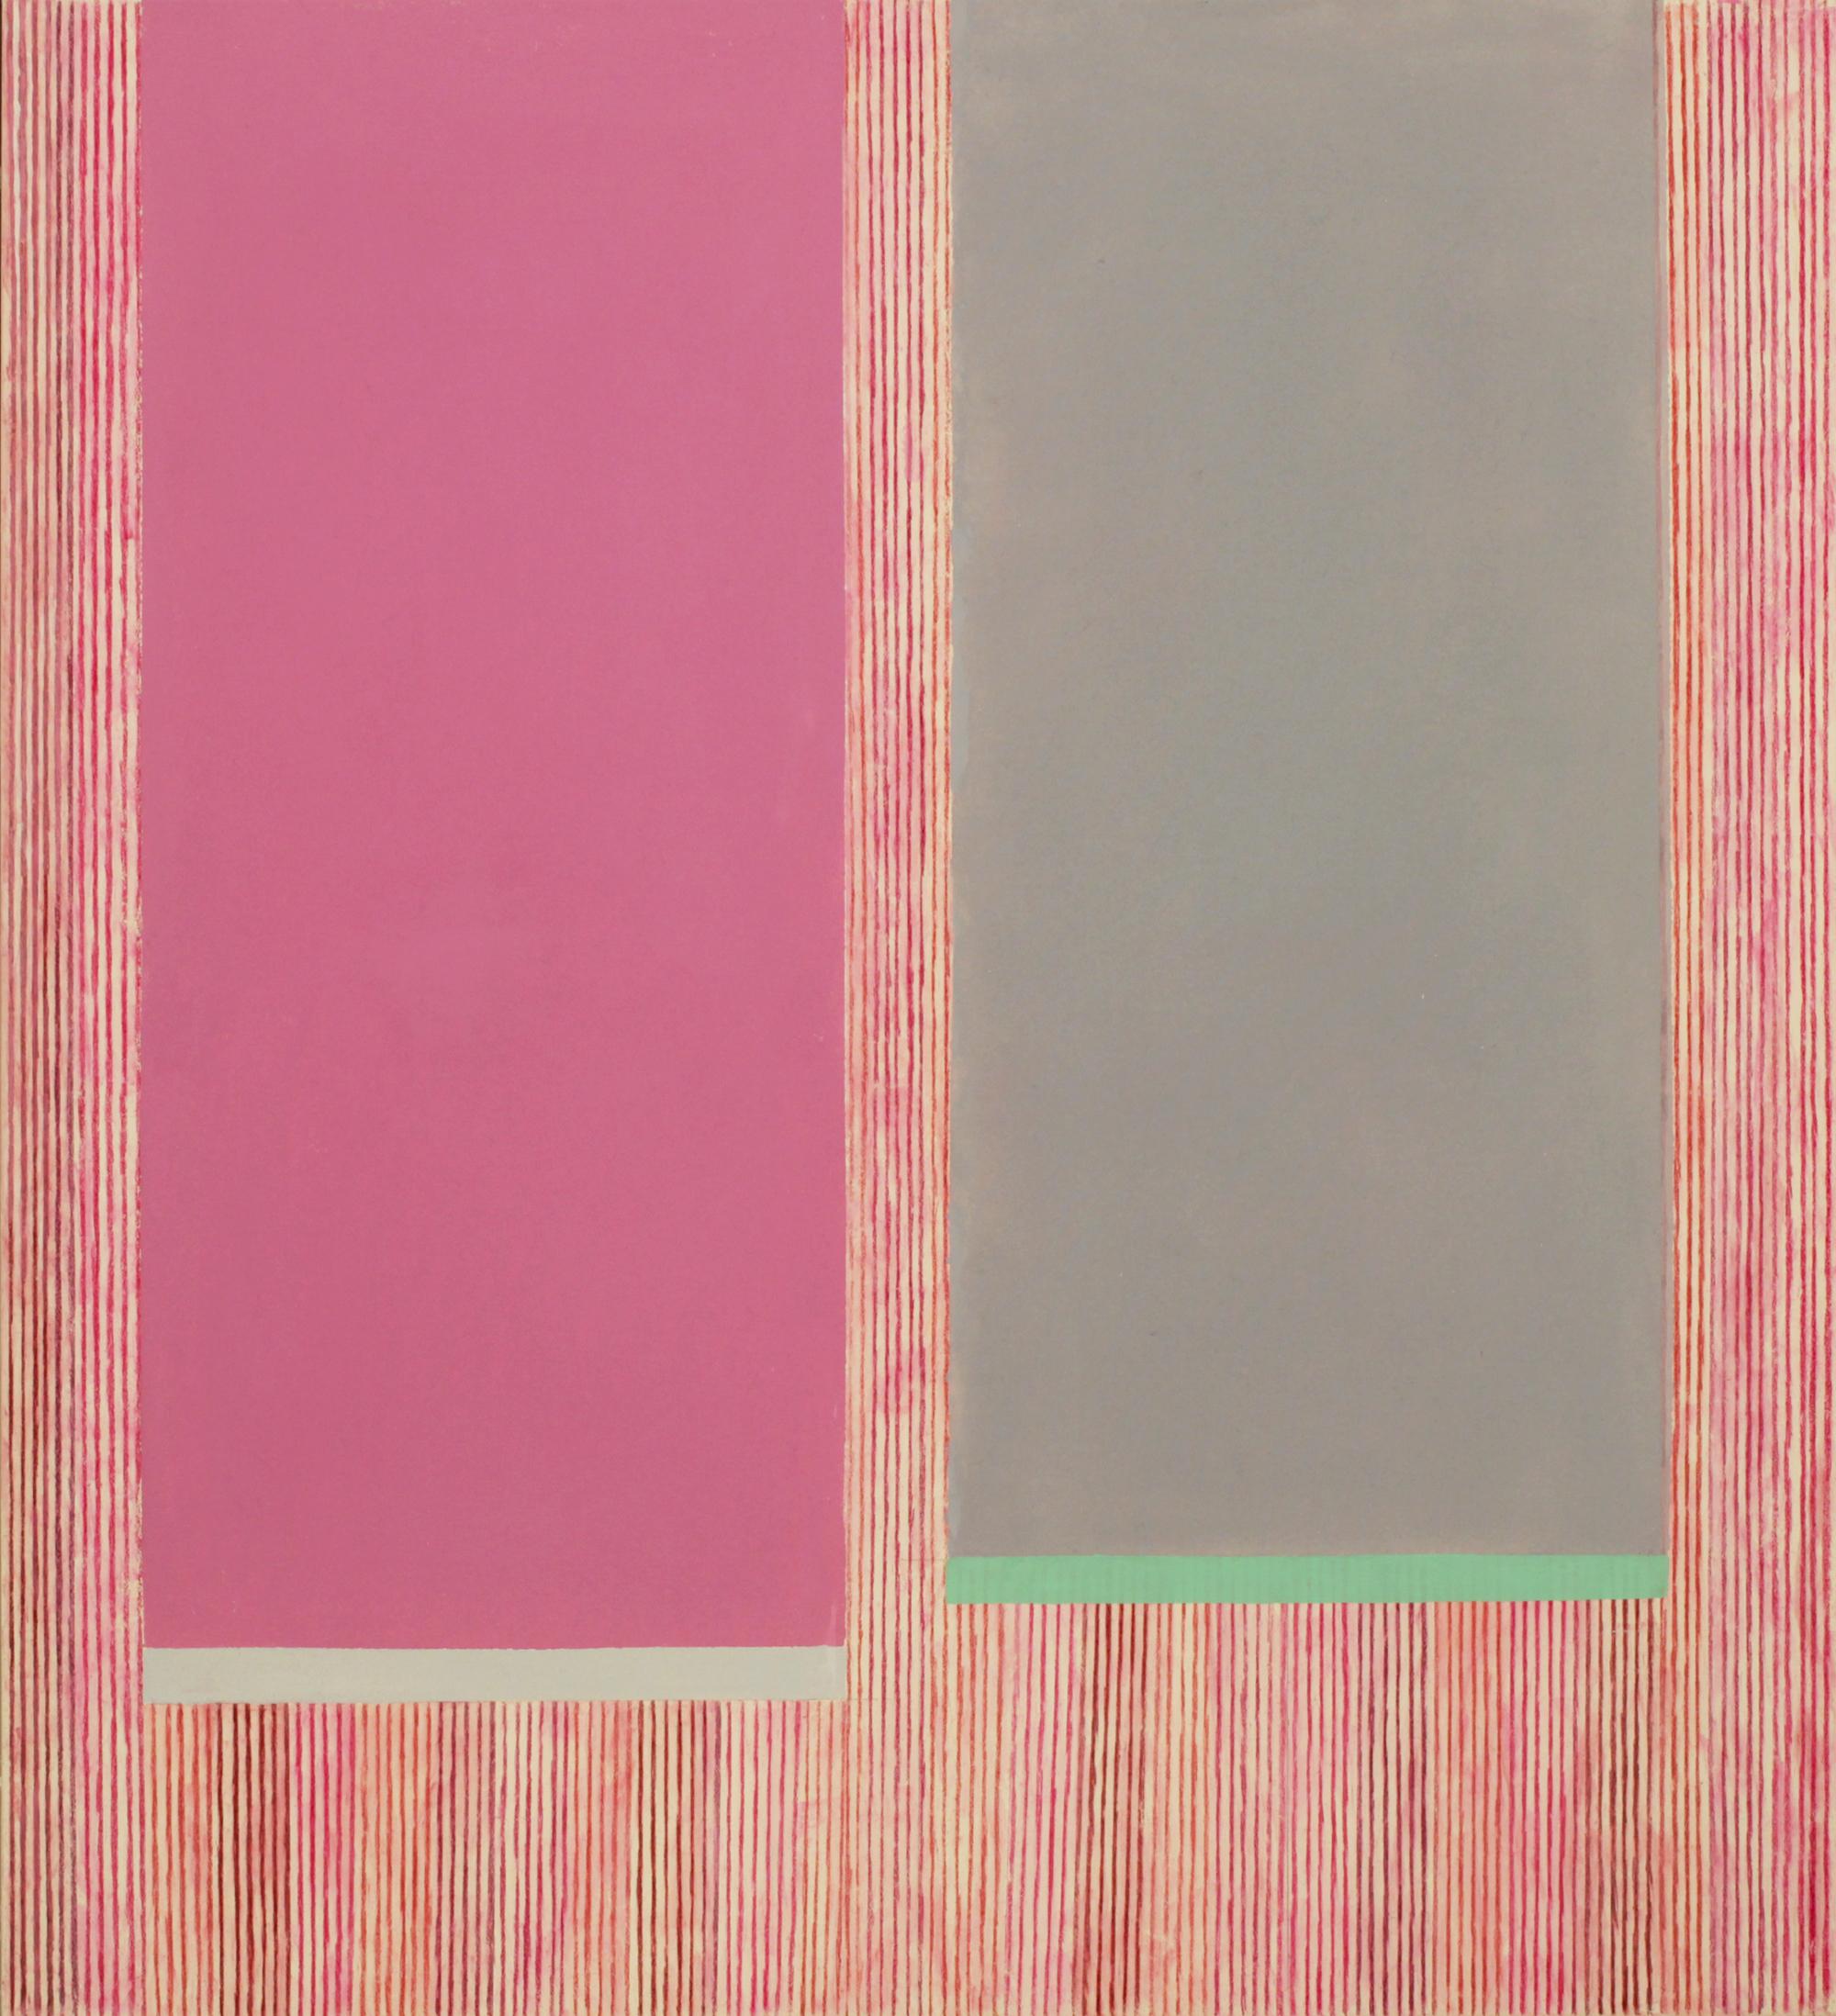 Elizabeth Gourlay Abstract Painting – Geometrisches abstraktes Gemälde in Magentagrau B, Rosa, Grau, Grün, Rot gestreift